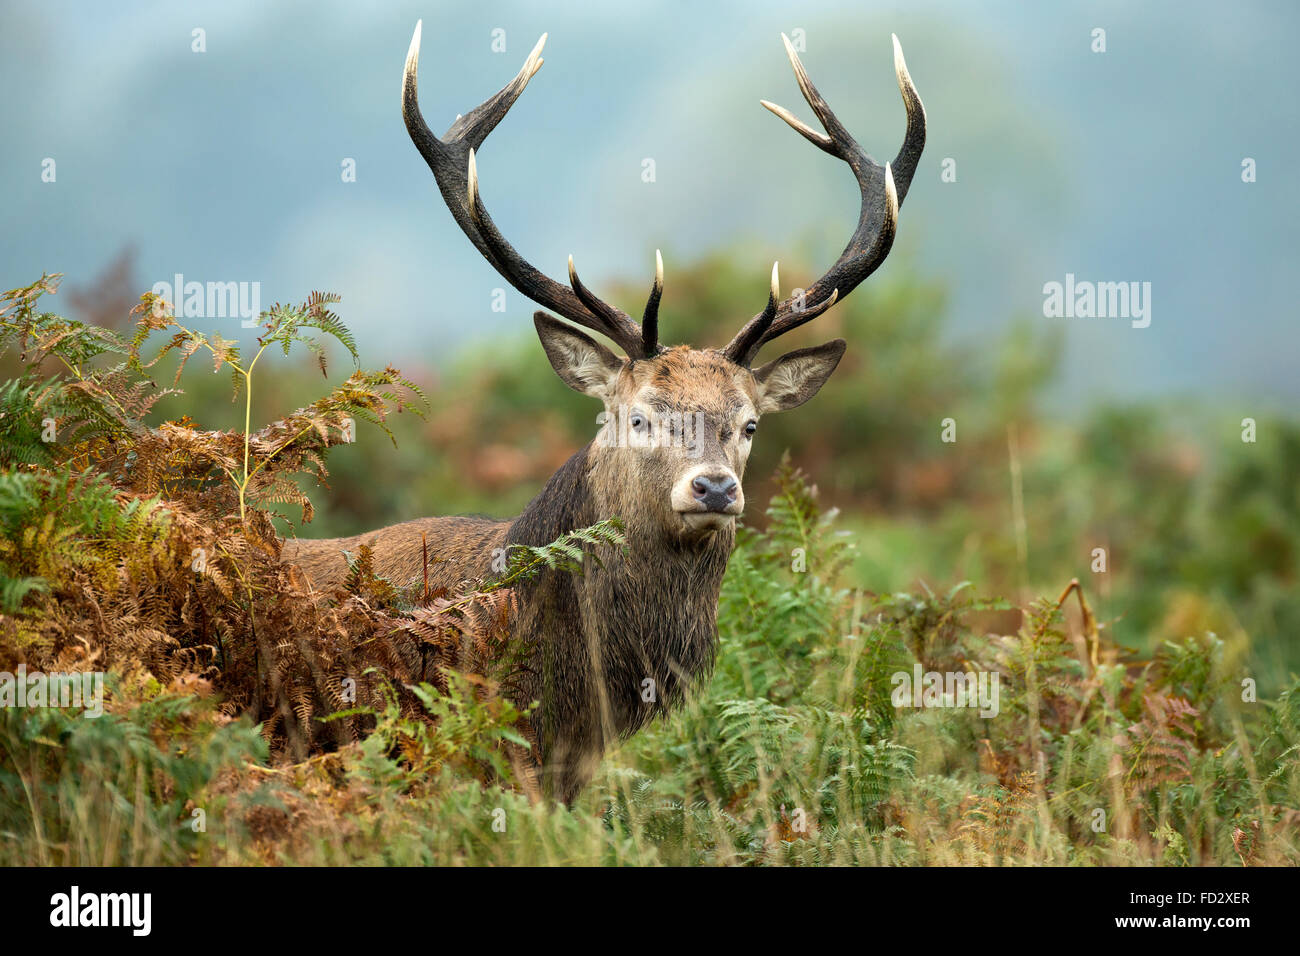 Red deer (Cervus elaphus) stag standing amongst bracken during rutting season Stock Photo